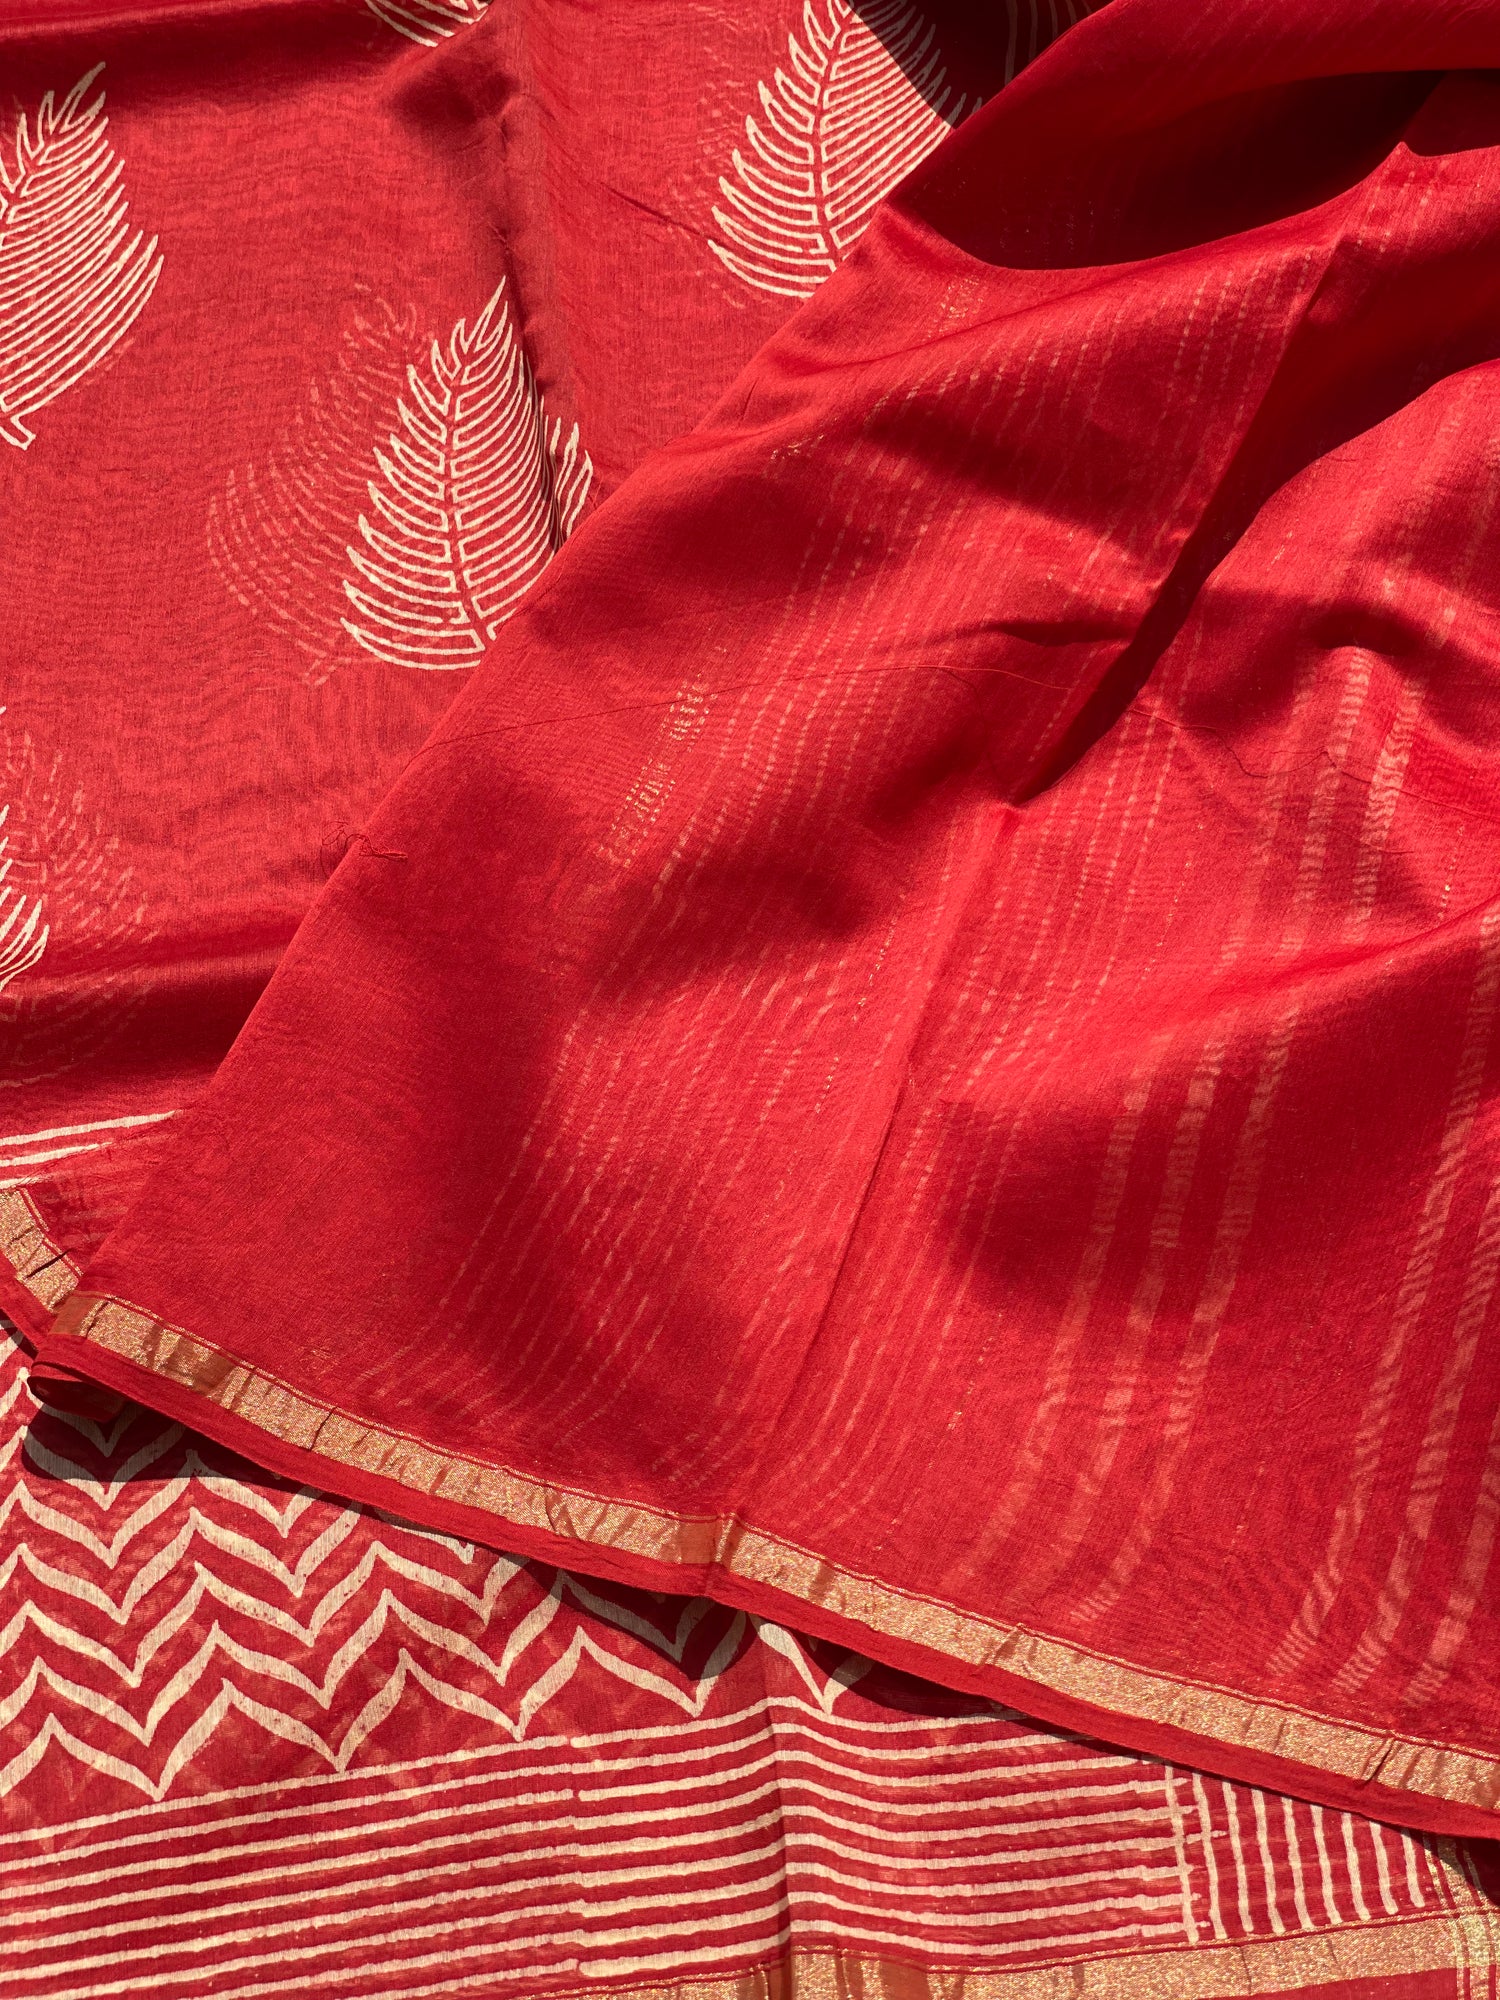 Chanderi Silk cotton hand block printed saree with striped zari border